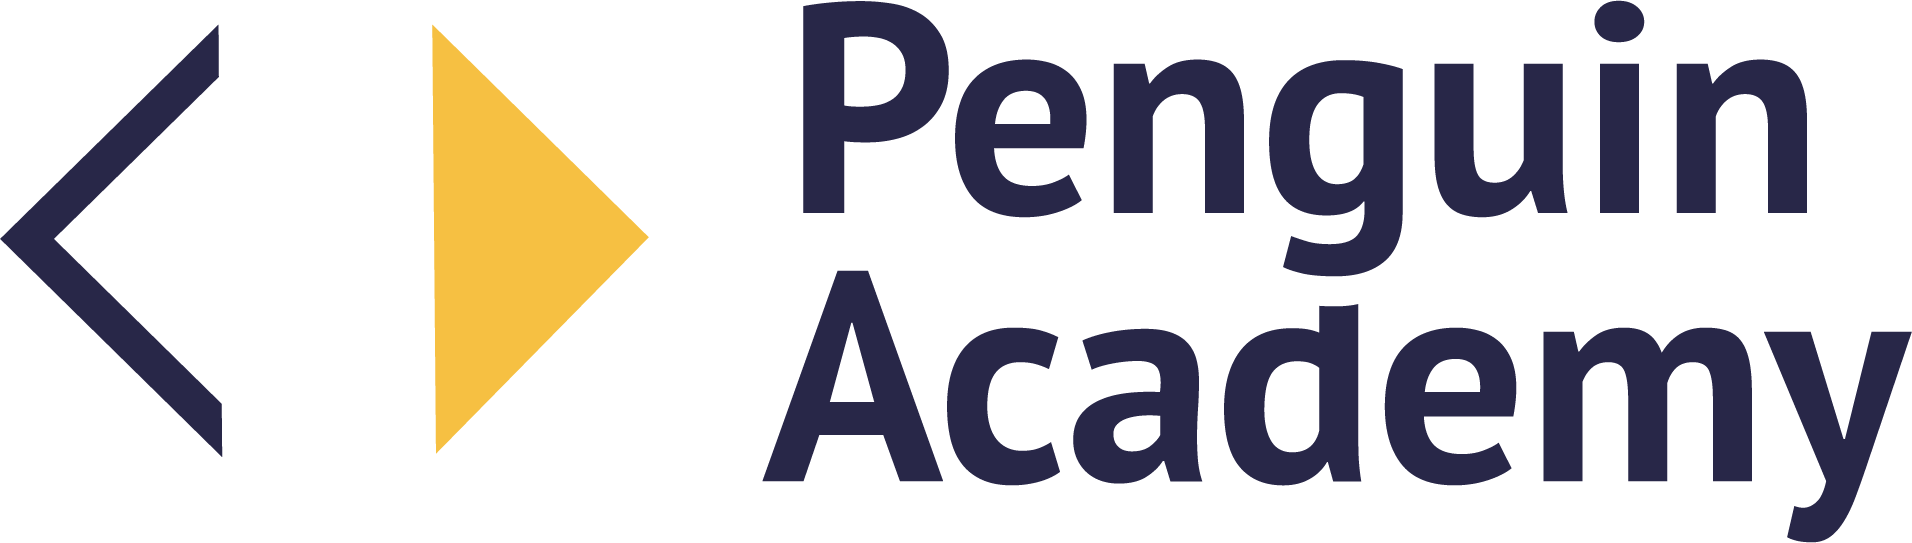 Penguin Academy